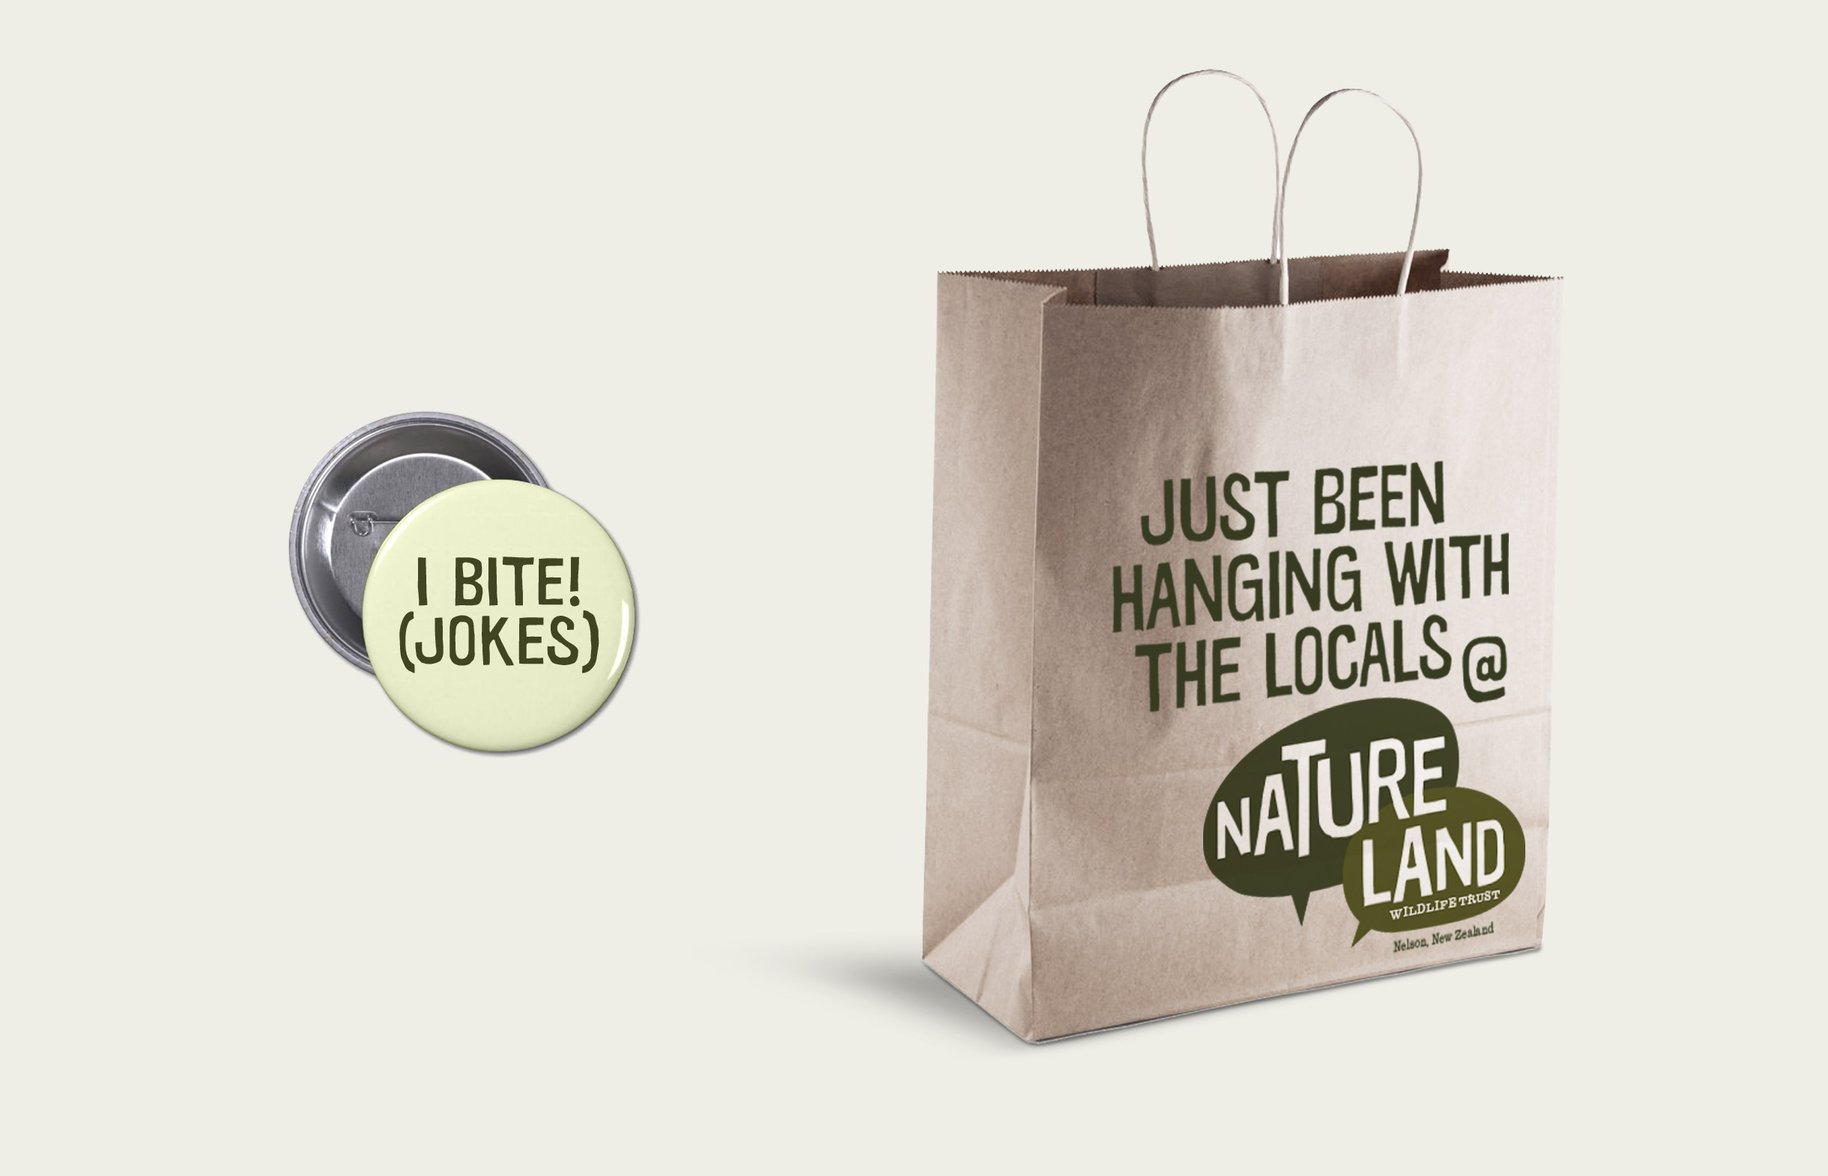 Natureland branded gift bag and pin